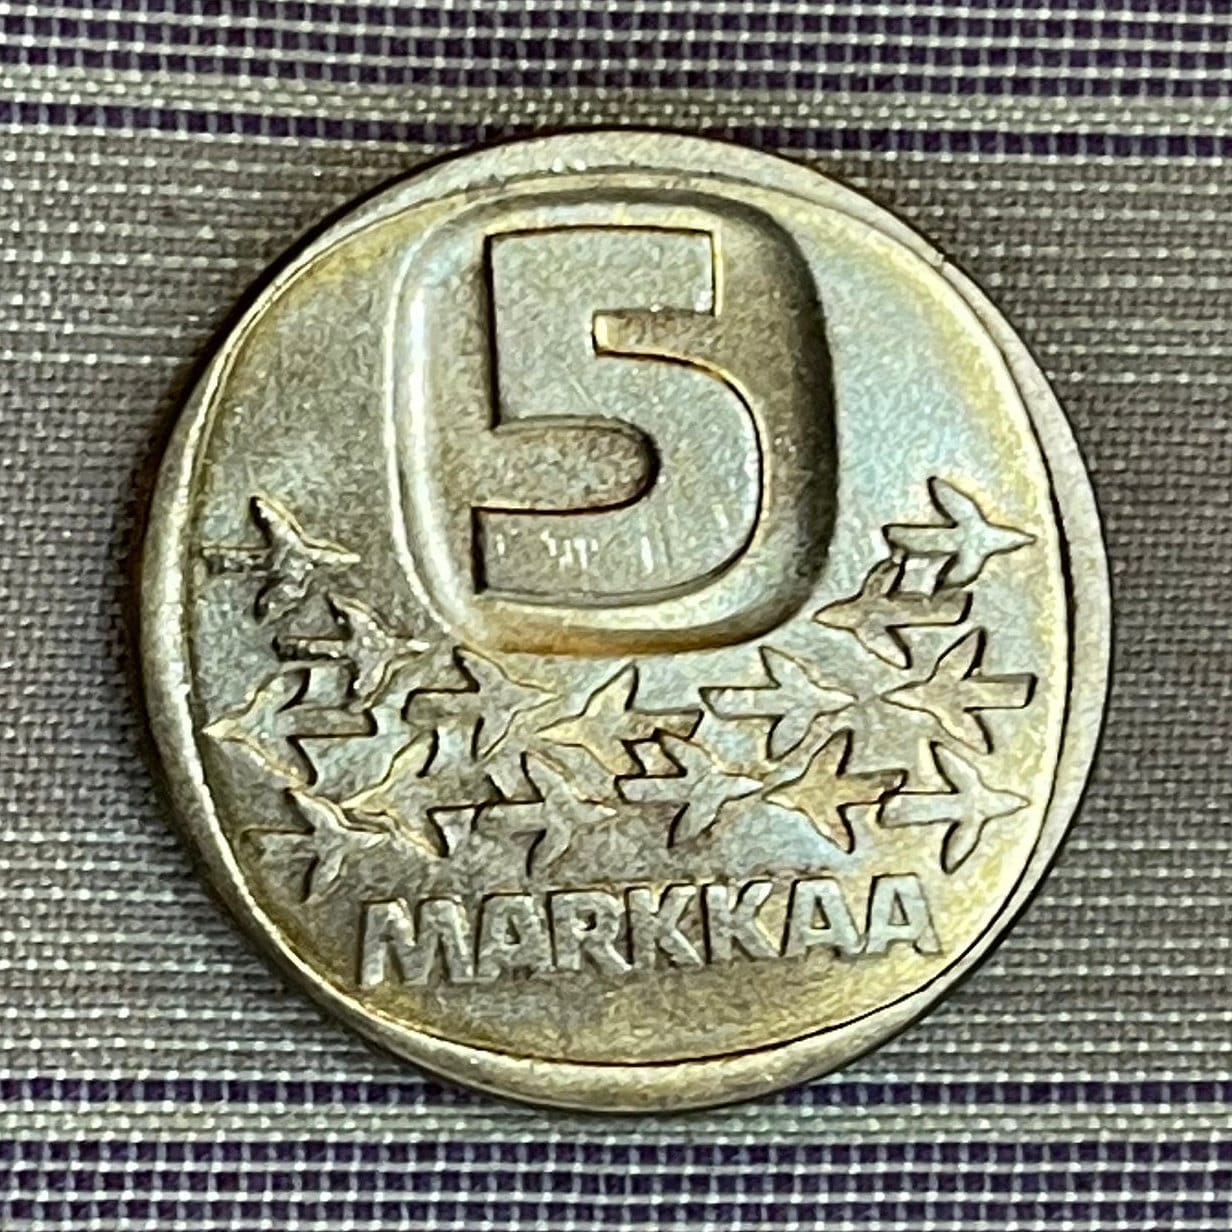 Flock of Birds & Icebreaker Urho 5 Markkaa Finland Authentic Coin Money for Jewelry and Craft Making (Urho Kekkonen) (Arctic)